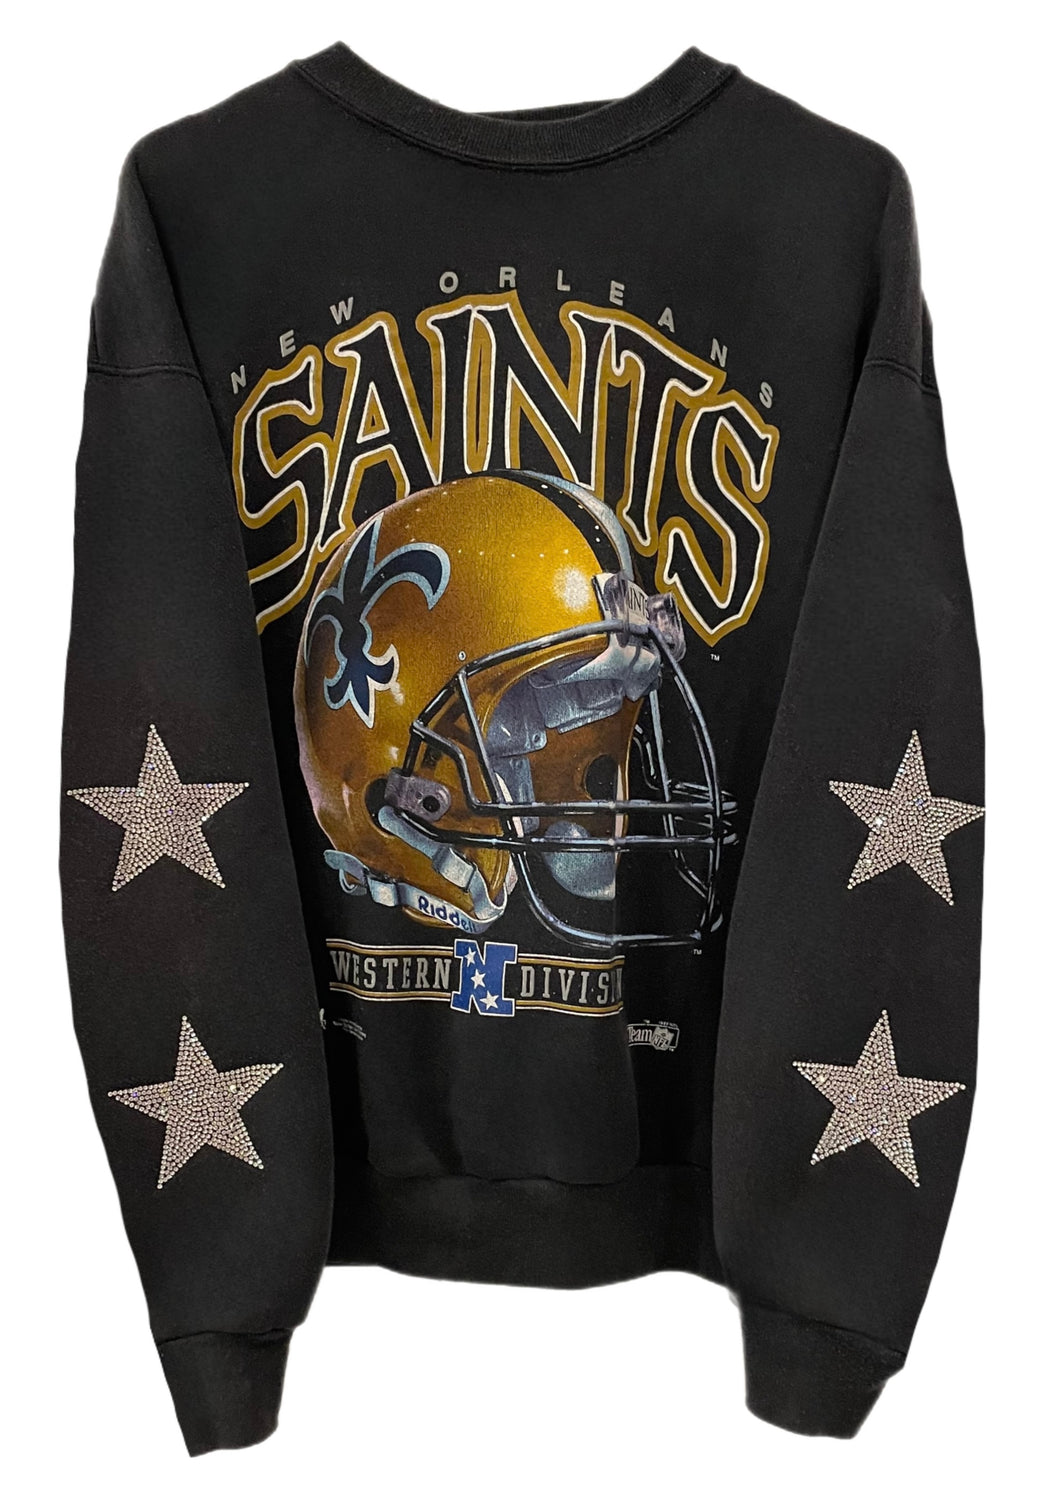 New Orleans Saints, NFL One of a KIND Vintage “Rare Find” Sweatshirt with Crystal Star Design